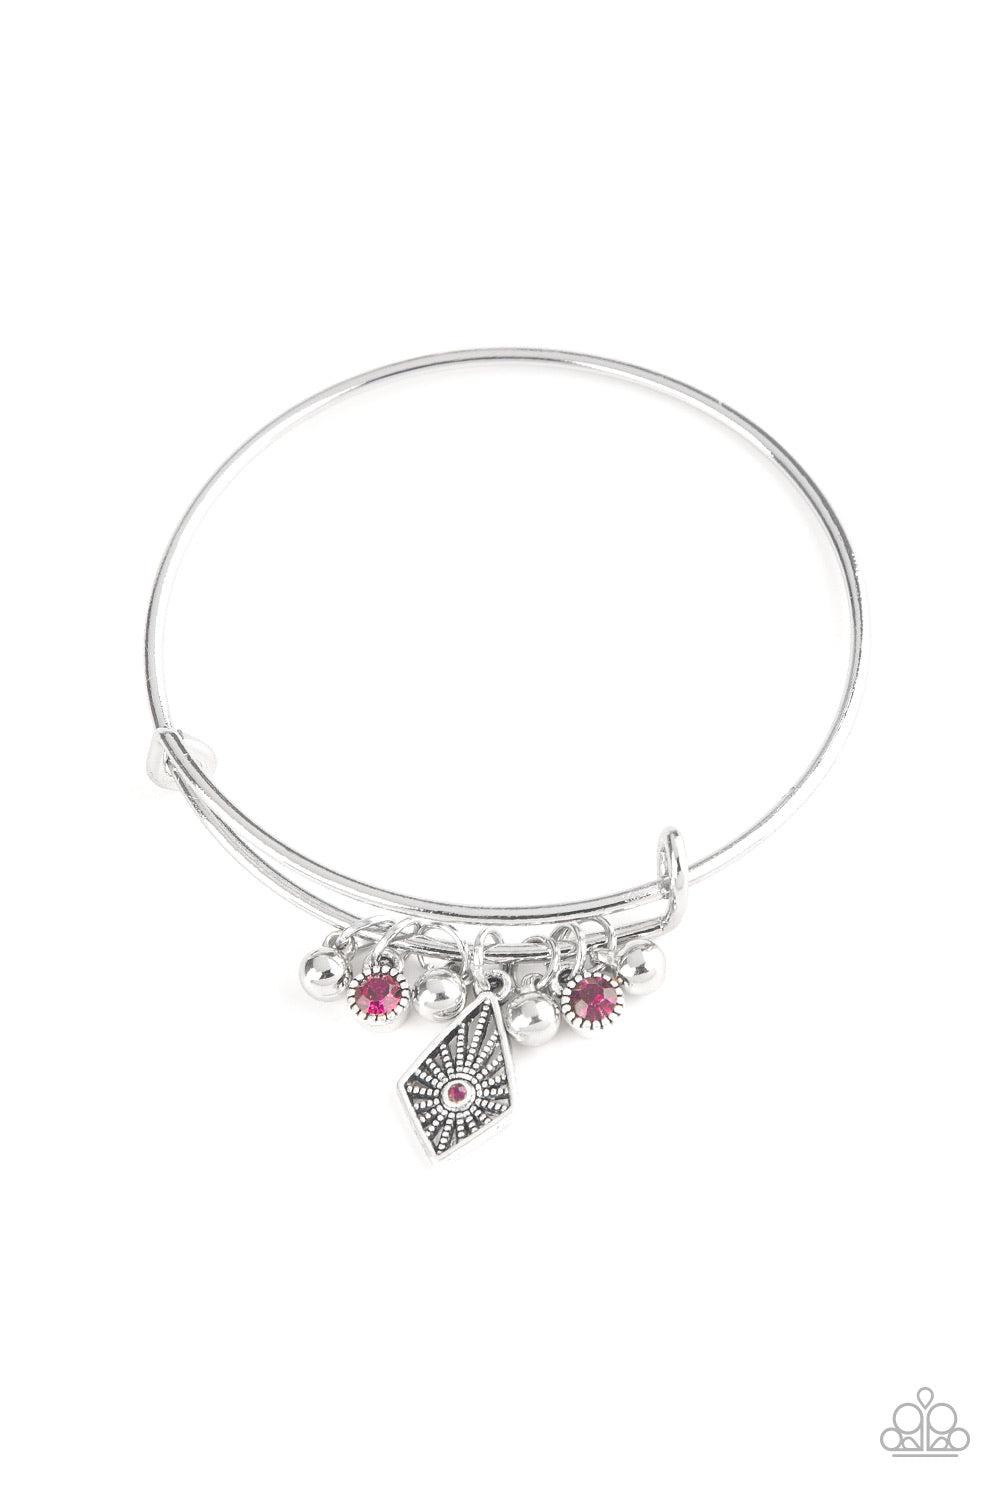 Treasure Charms - Pink Bracelet - Paparazzi Accessories